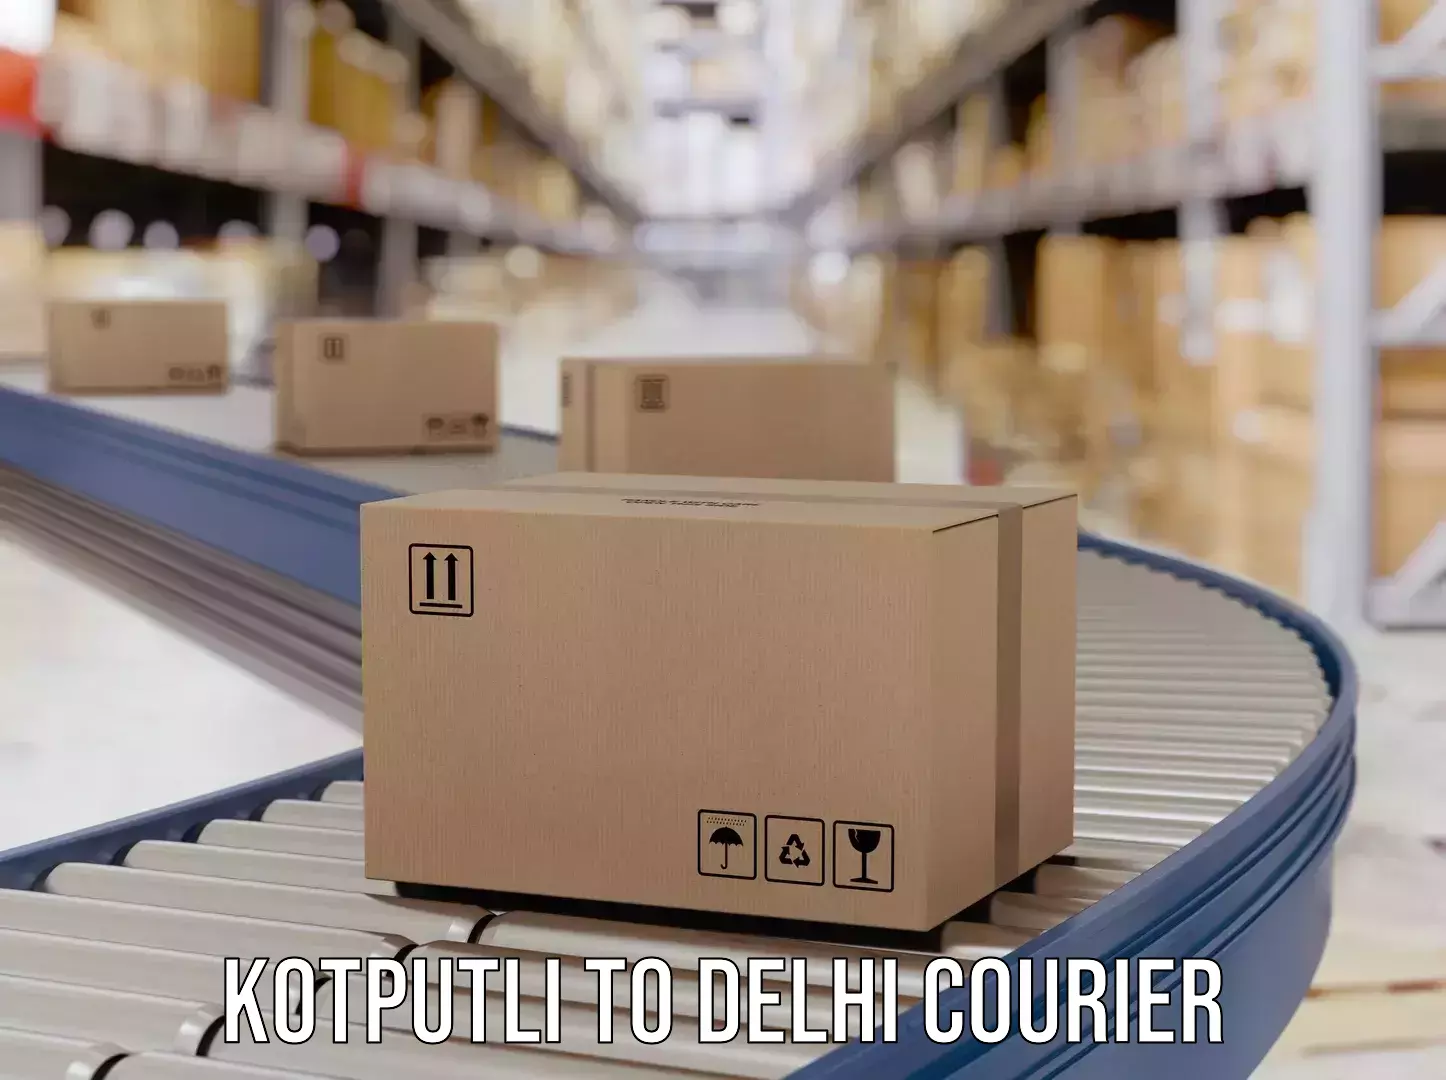 Courier service booking Kotputli to NCR